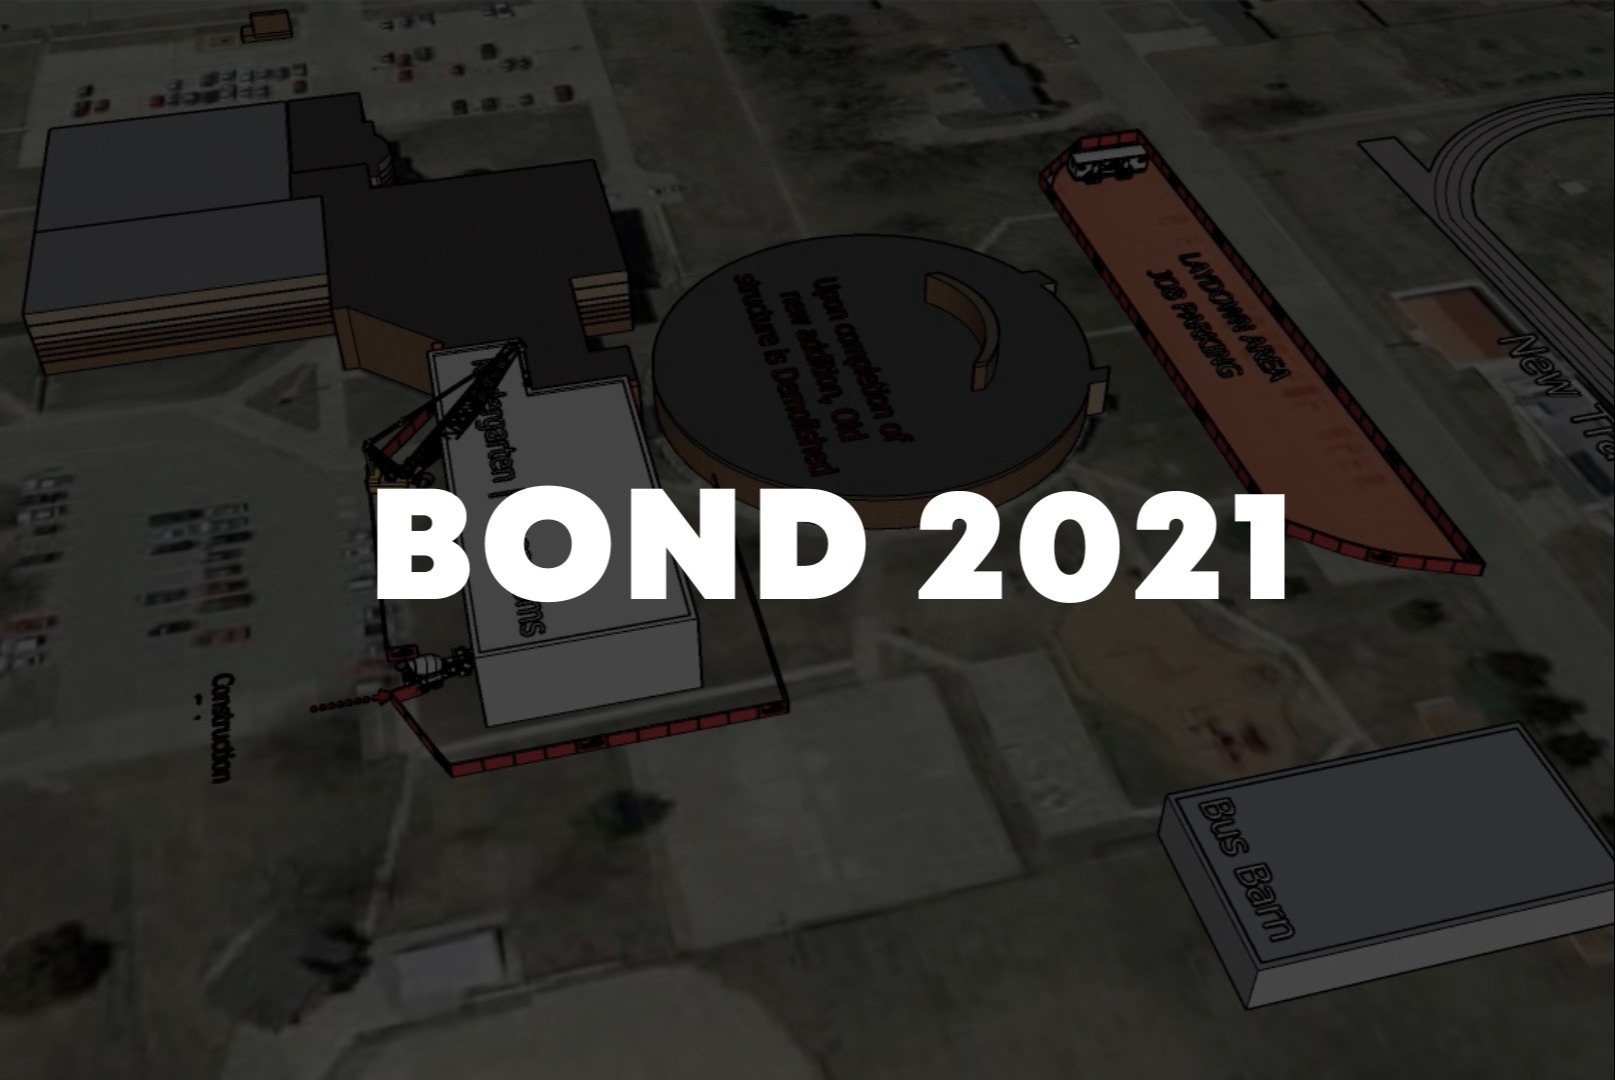 Bond 2021 button